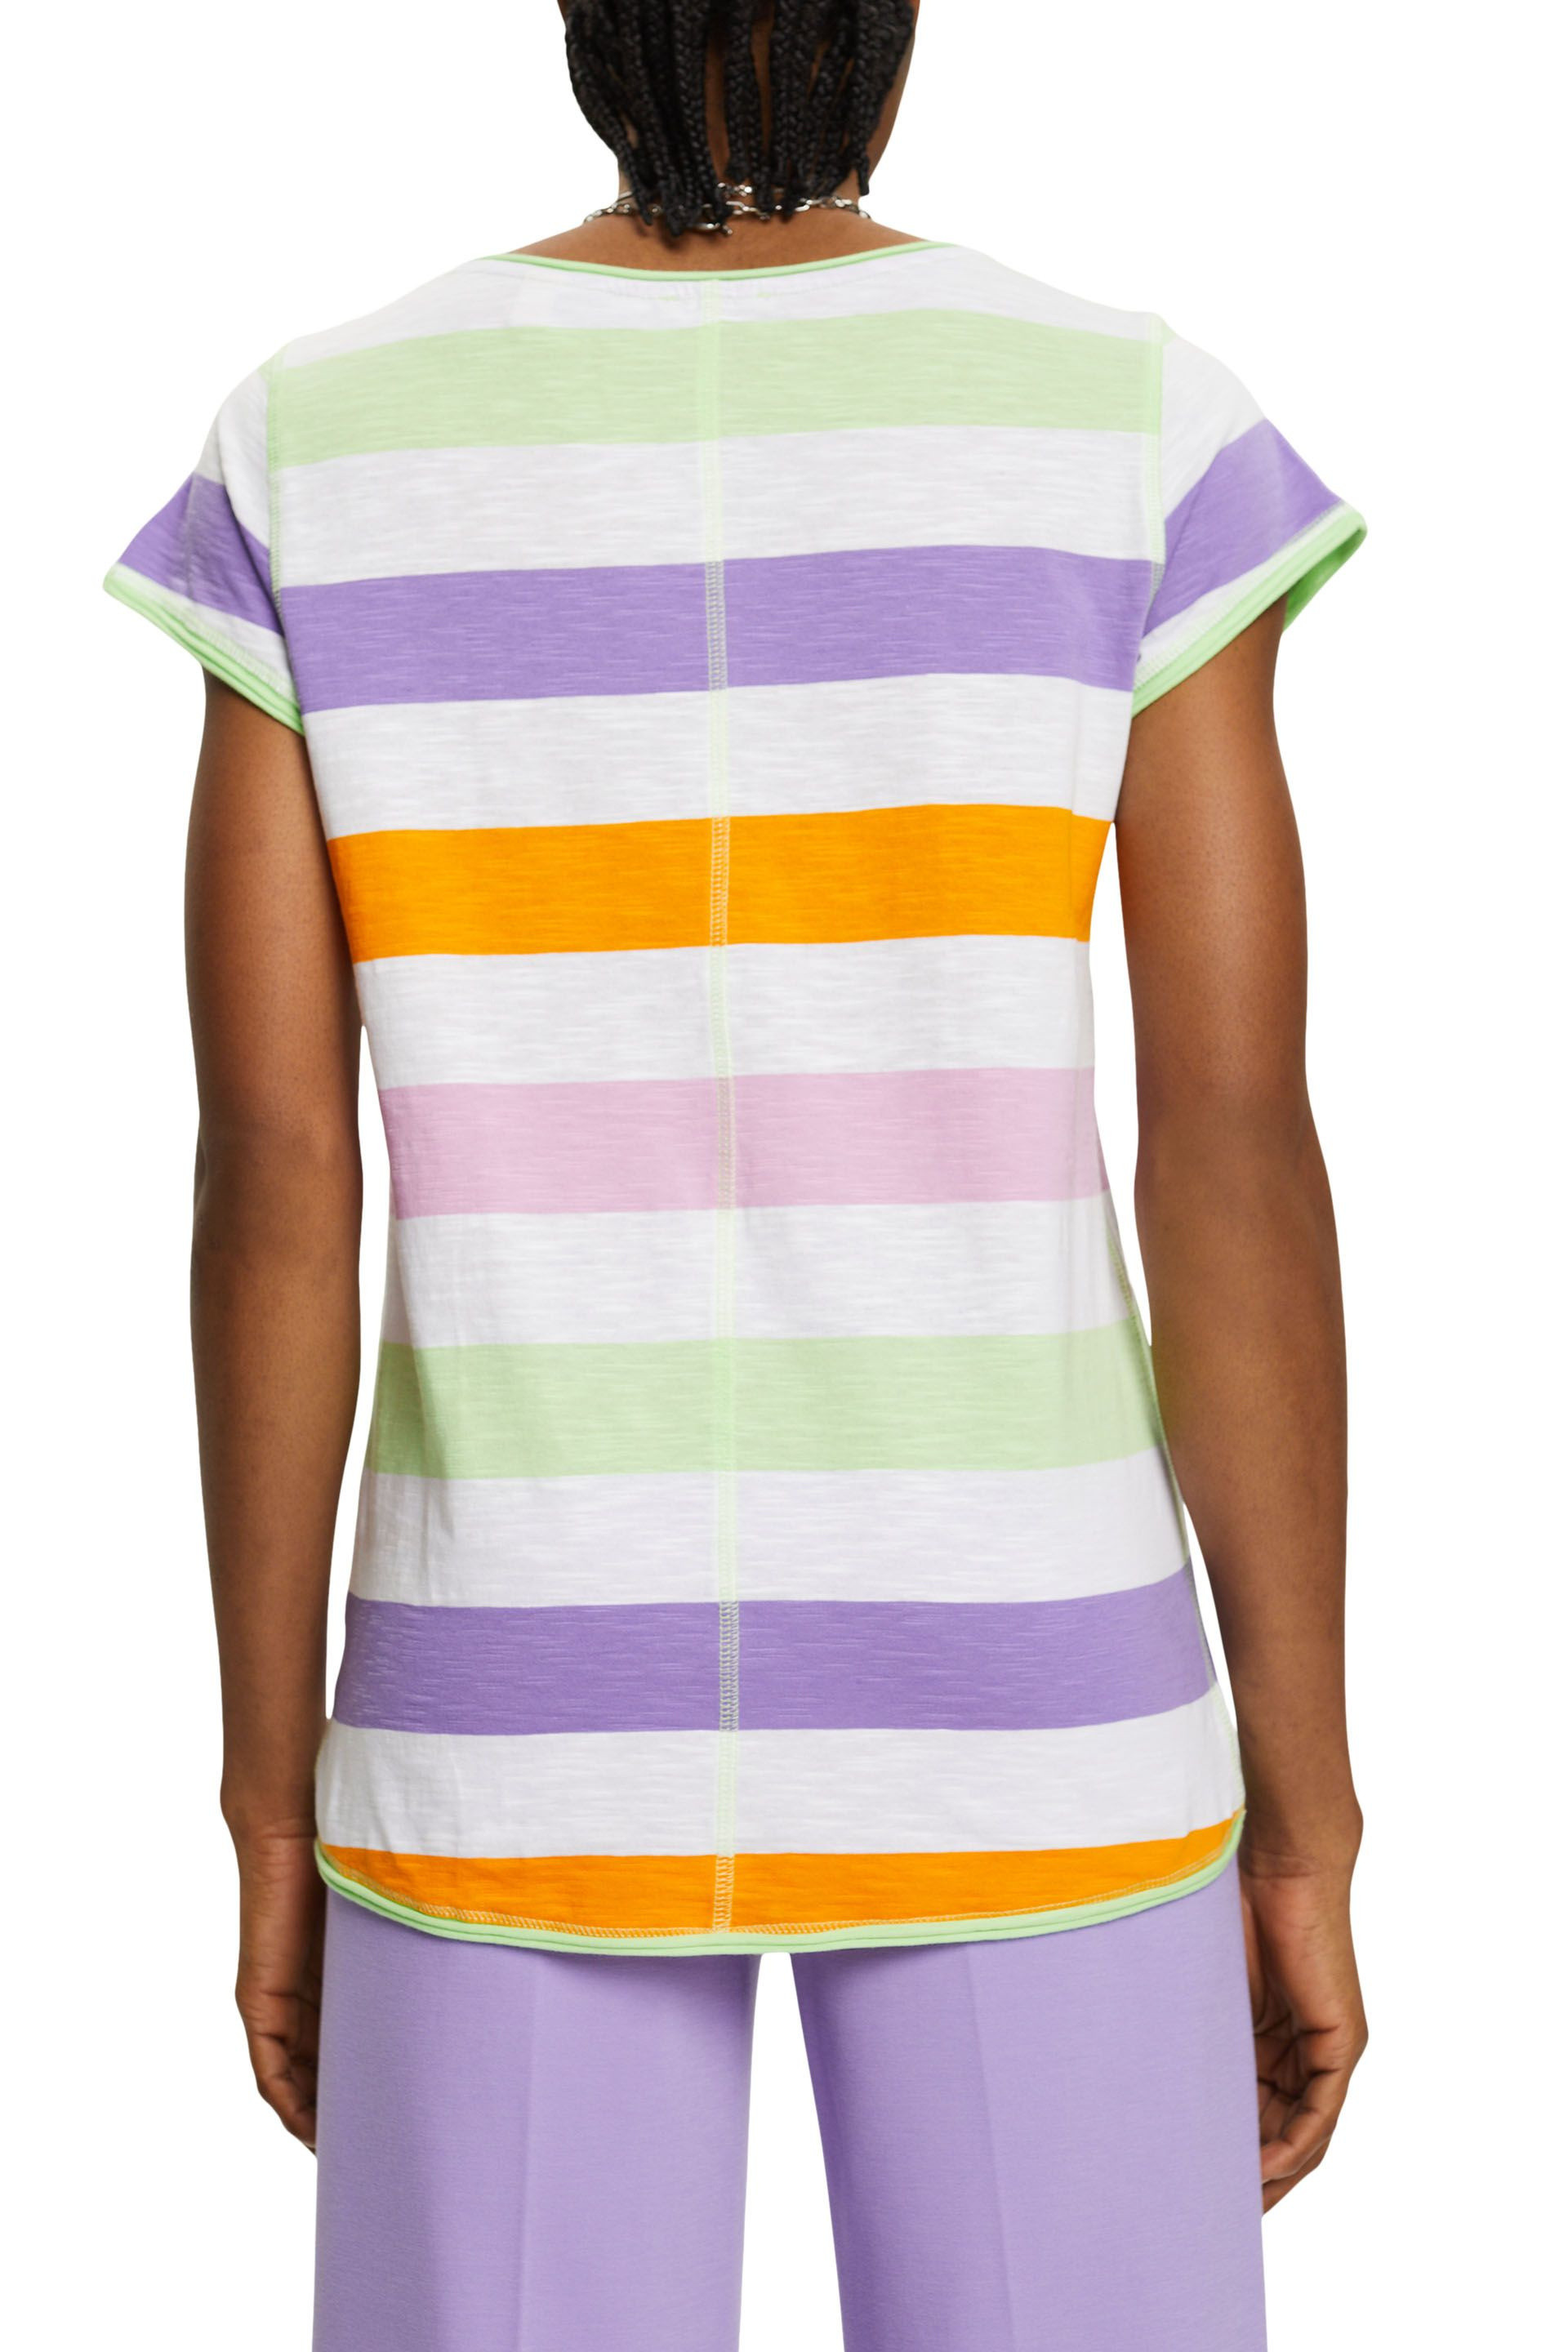 Esprit - T-shirt a righe, Multicolor, large image number 3